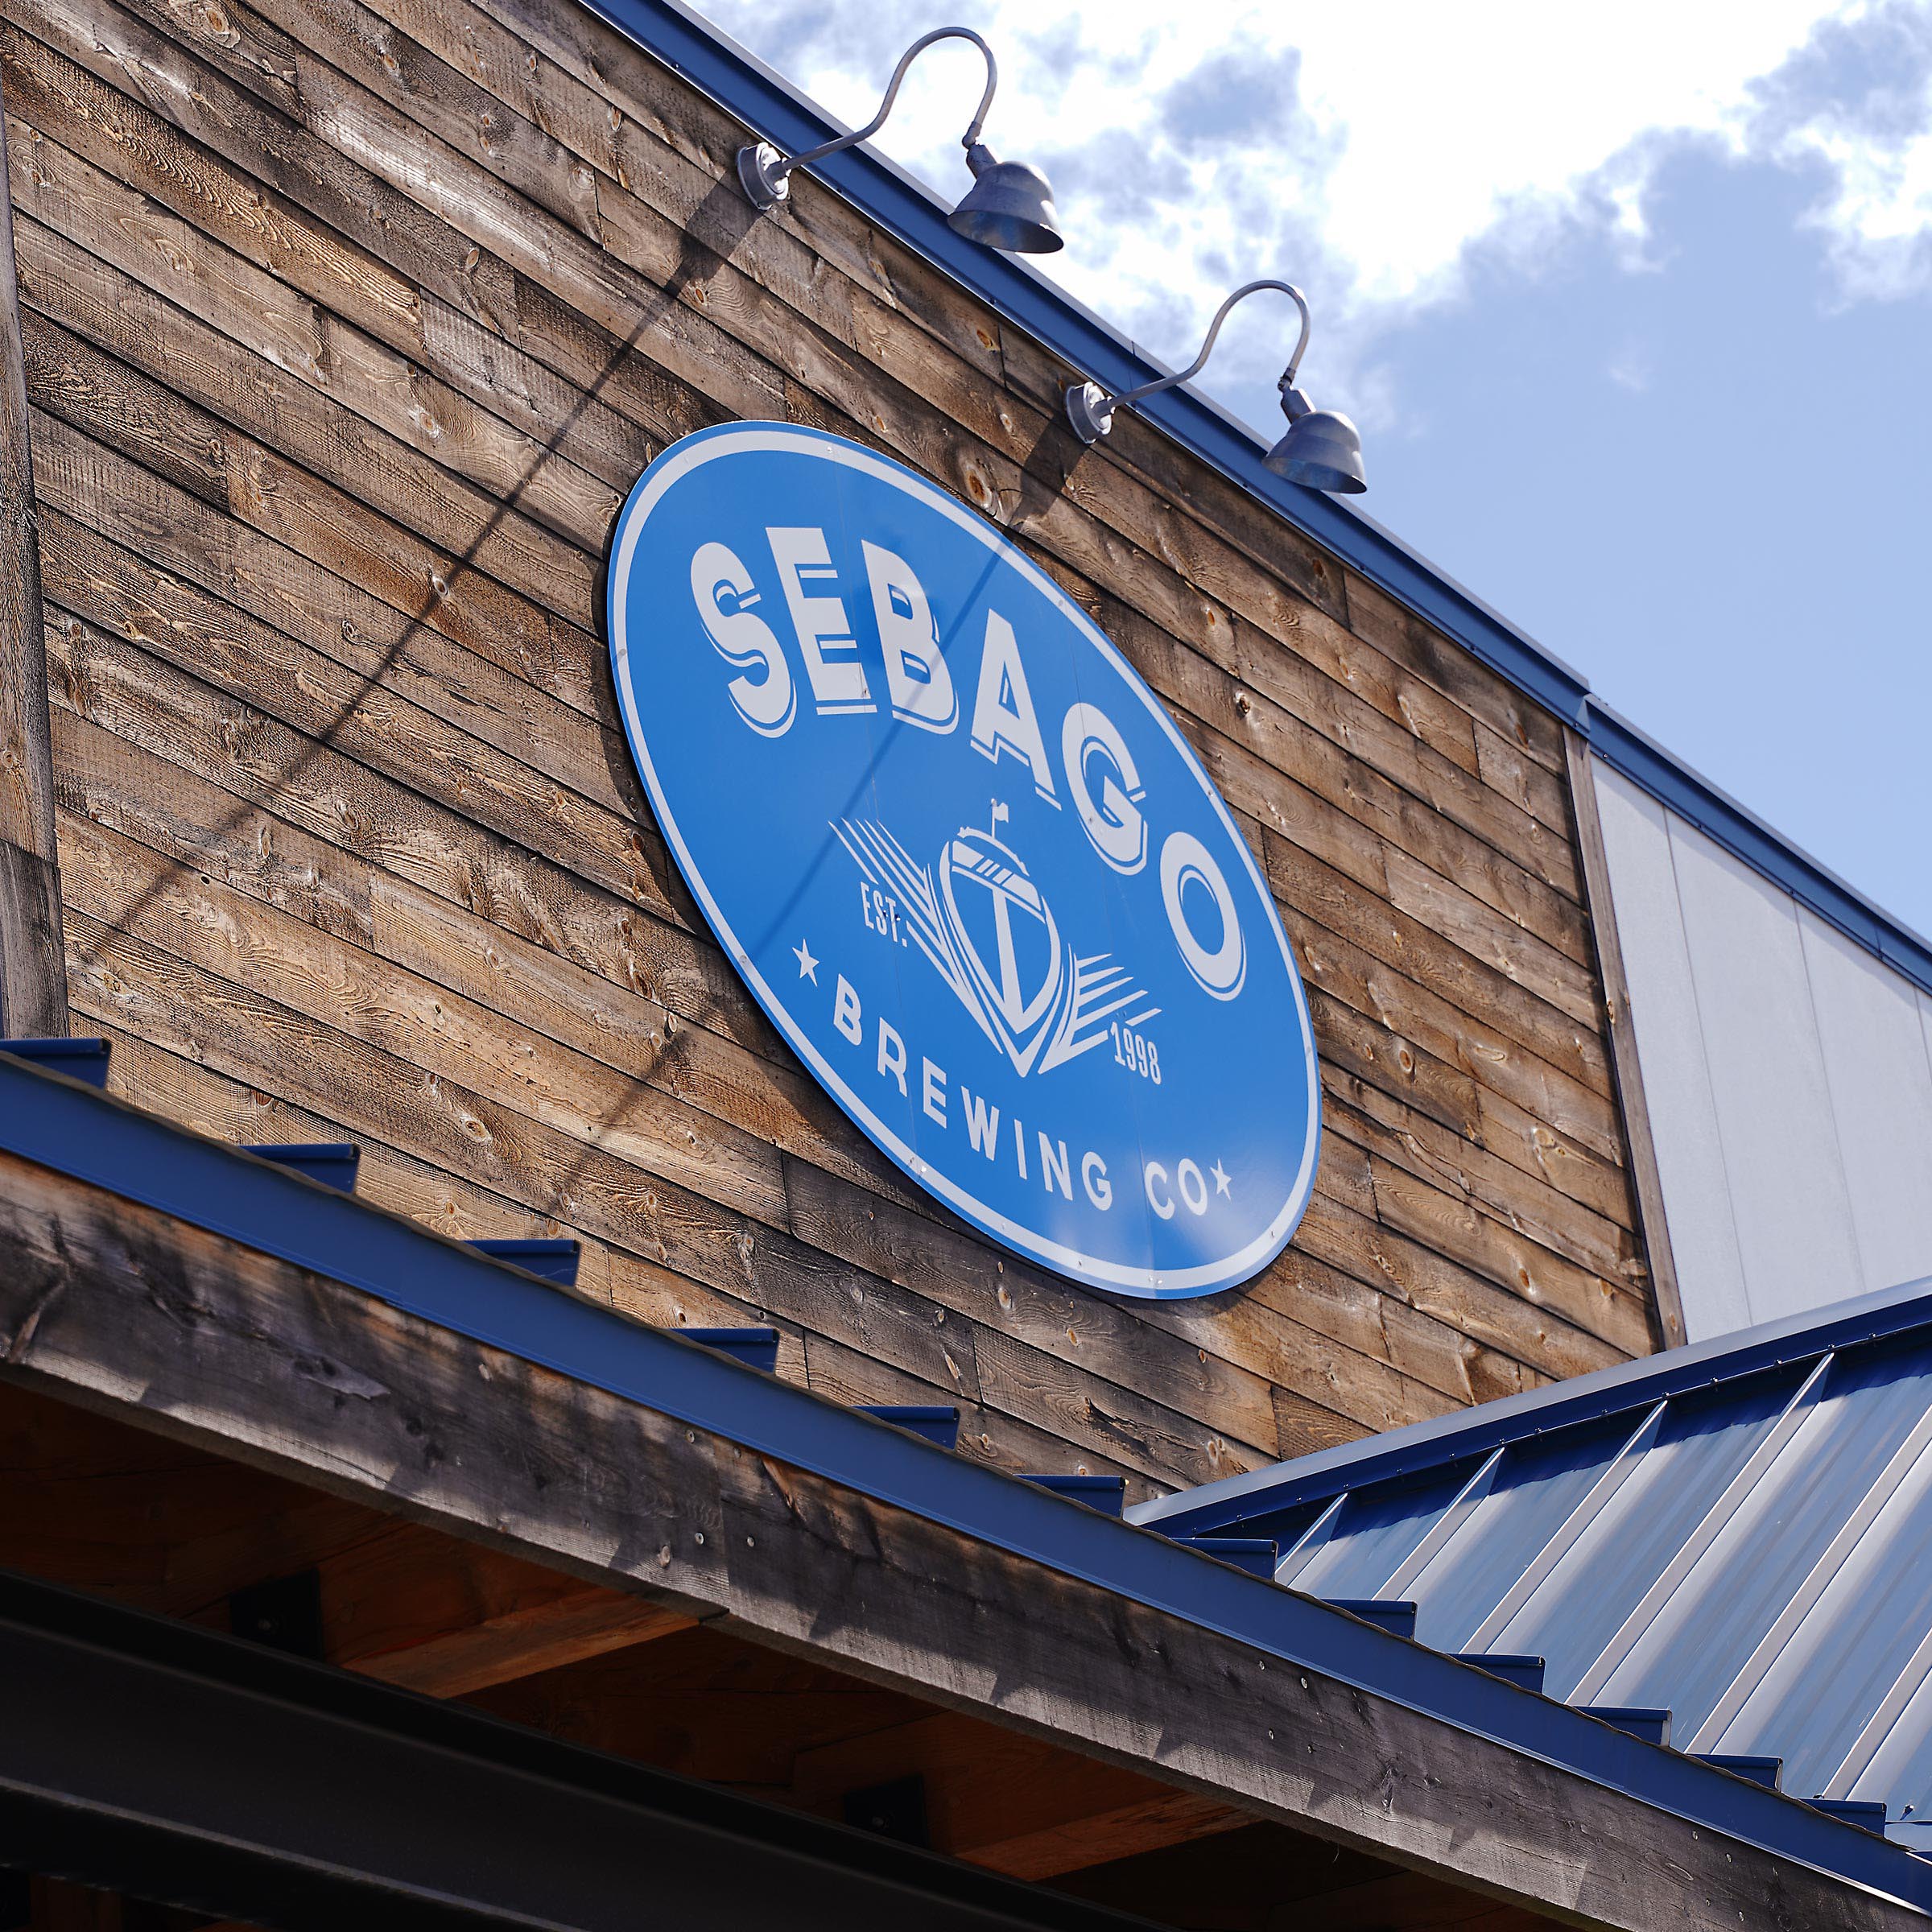 Sebago Brewing Company Tasting Room in Gorham Maine